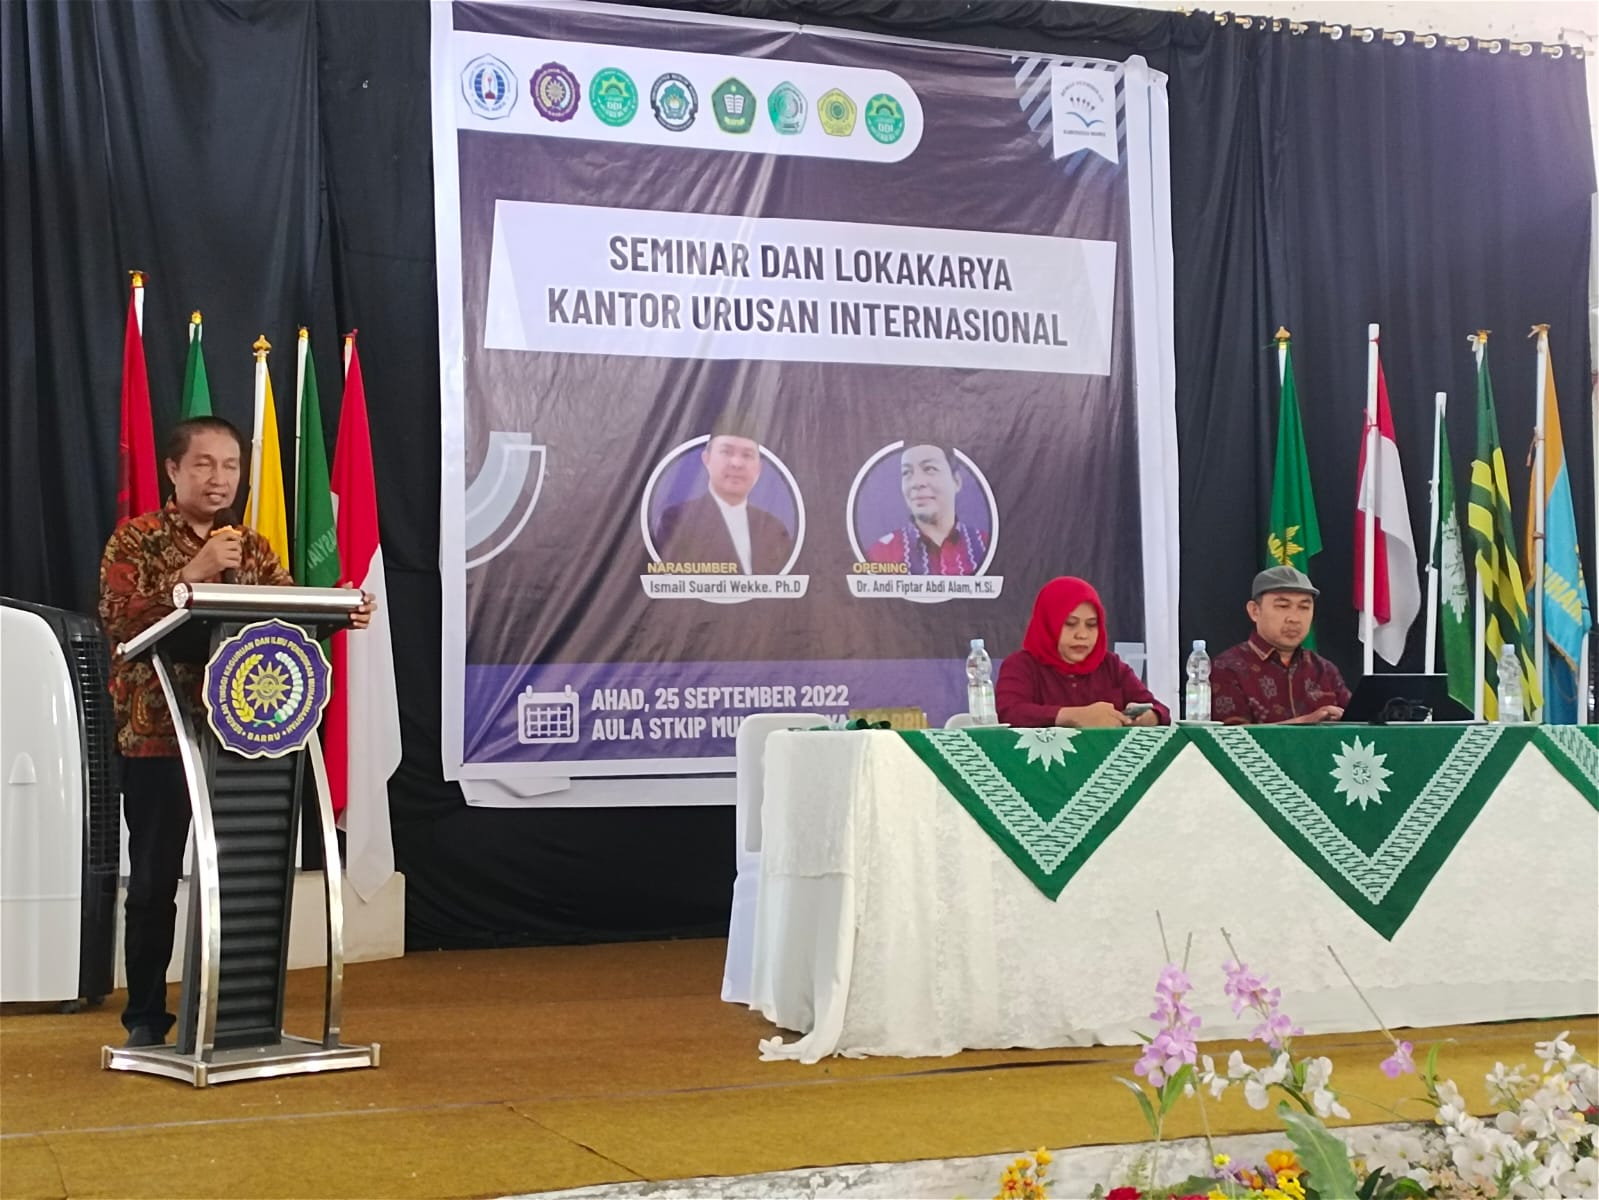 Sekolah Tinggi Keguruan Dan Ilmu Pendidikan (STKIP) Muhammadiyah Barru Dan Sekolah Tinggi Ilmu Administrasi (STIA) Abdul Haris Makassar Mengimplementasikan Hasil MoU-nya (Doc: DETIK Indonesia)